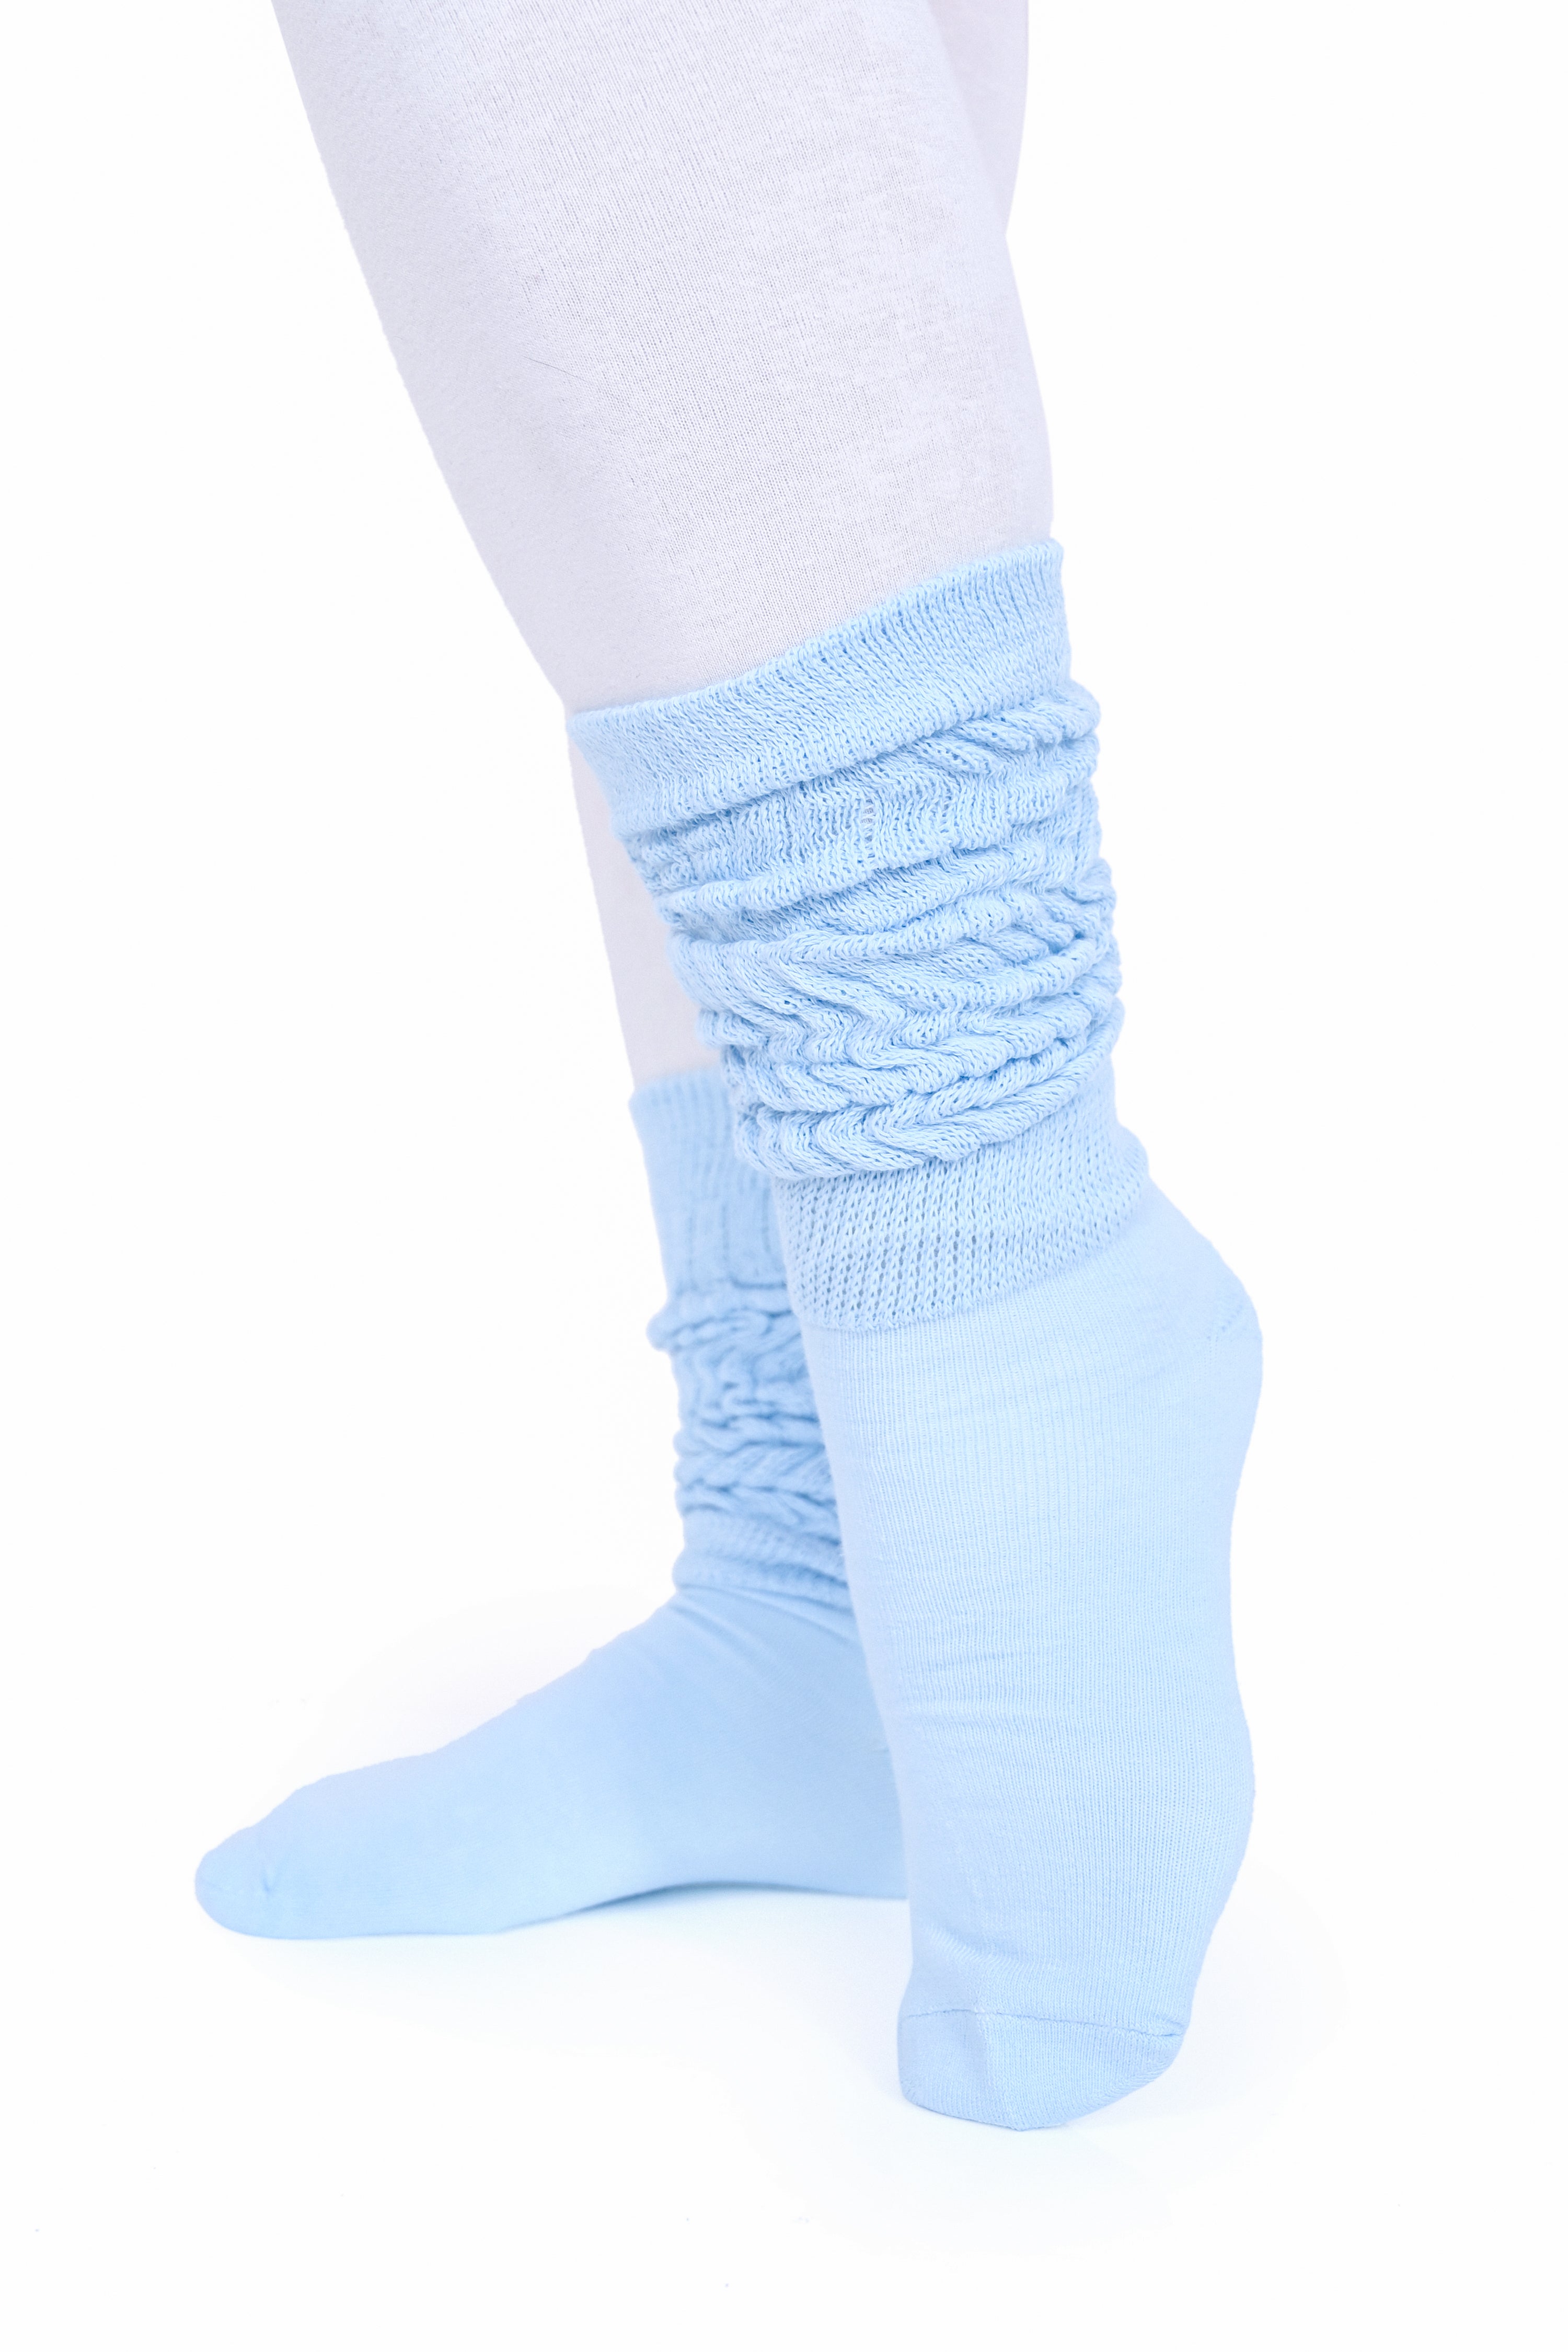 Blue scrunch socks